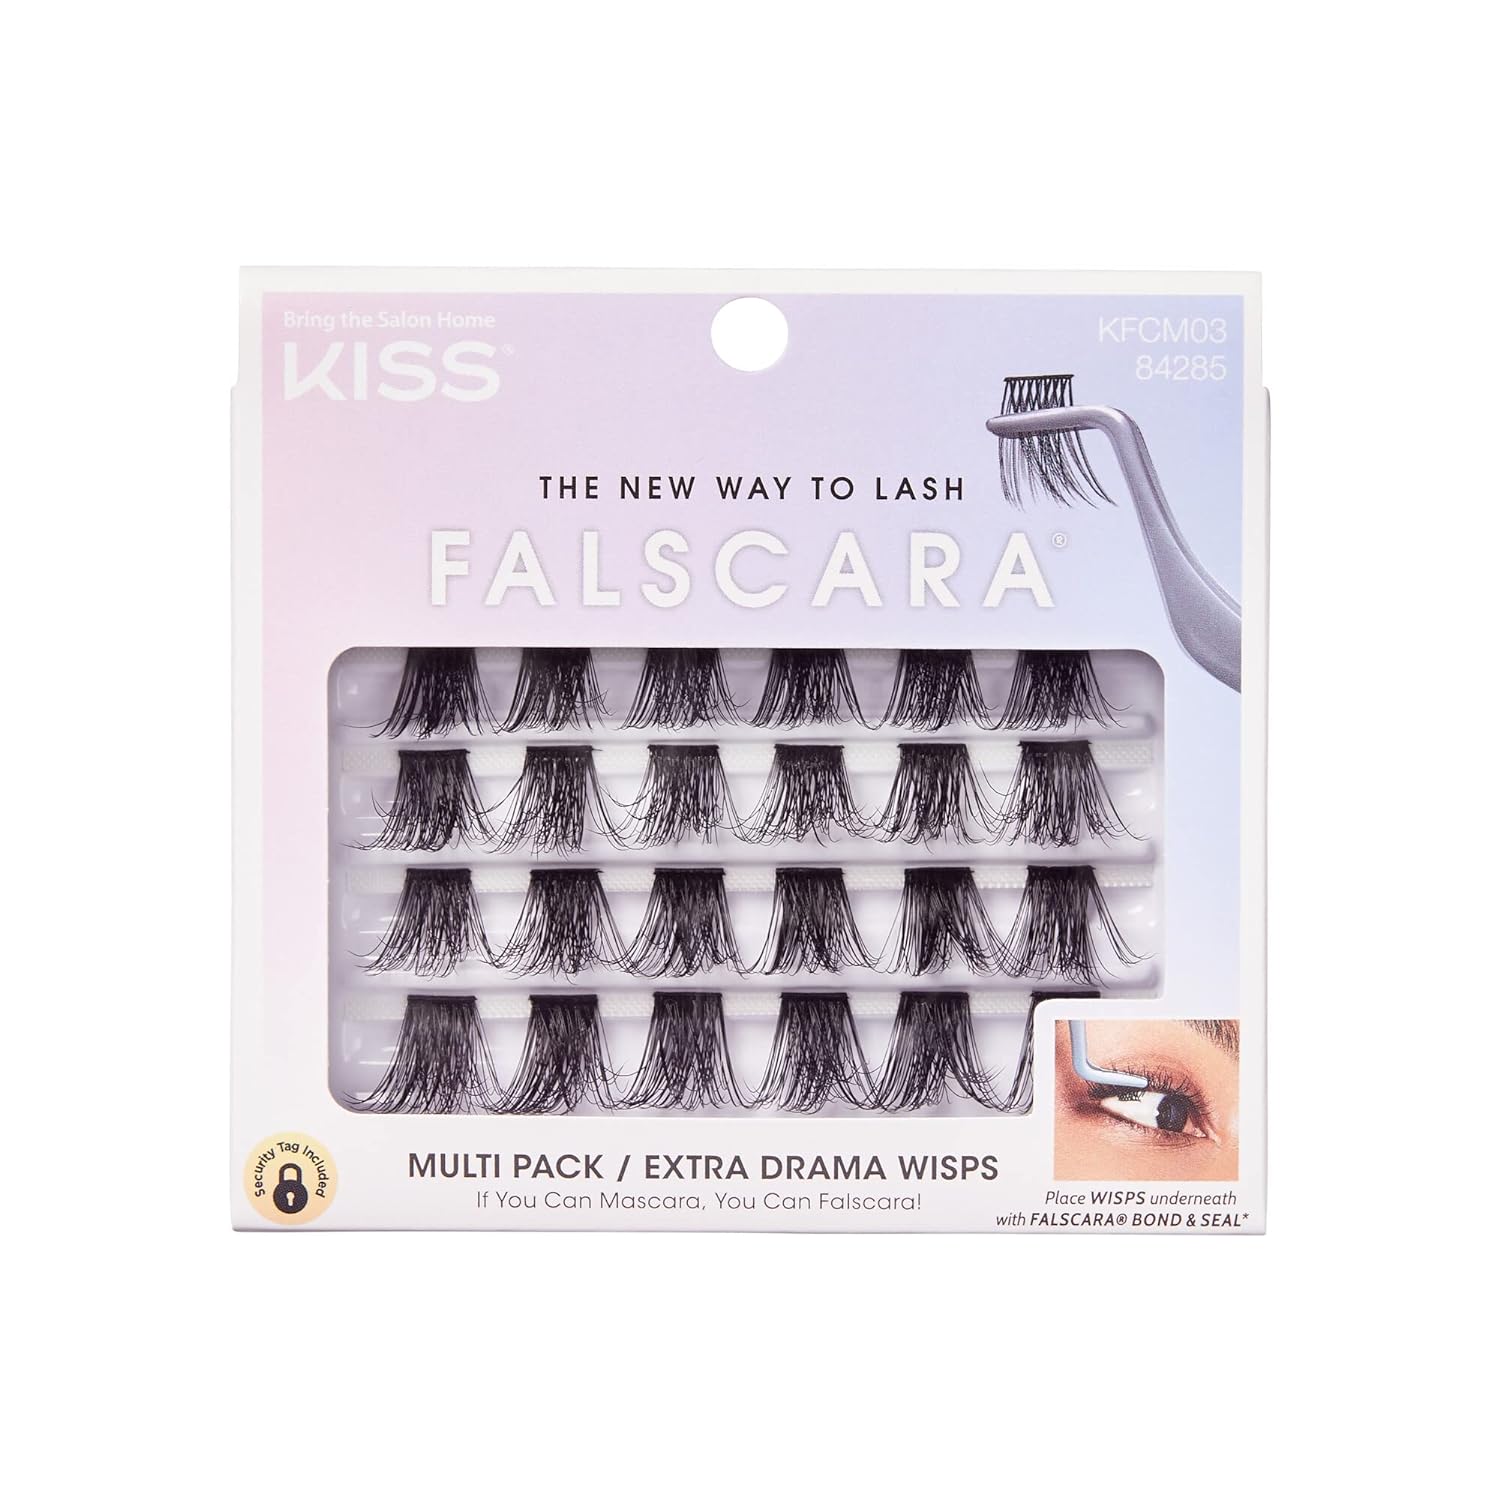 KISS Falscara Multipack False Eyelashes, Lash Clusters, Extra Drama Wisps', 18mm-20mm, Includes 24 Lash Wisps (6 Short, 12 Medium, 6 Long), Contact Lens Friendly, Easy to Apply, Reusable Strip Lashes